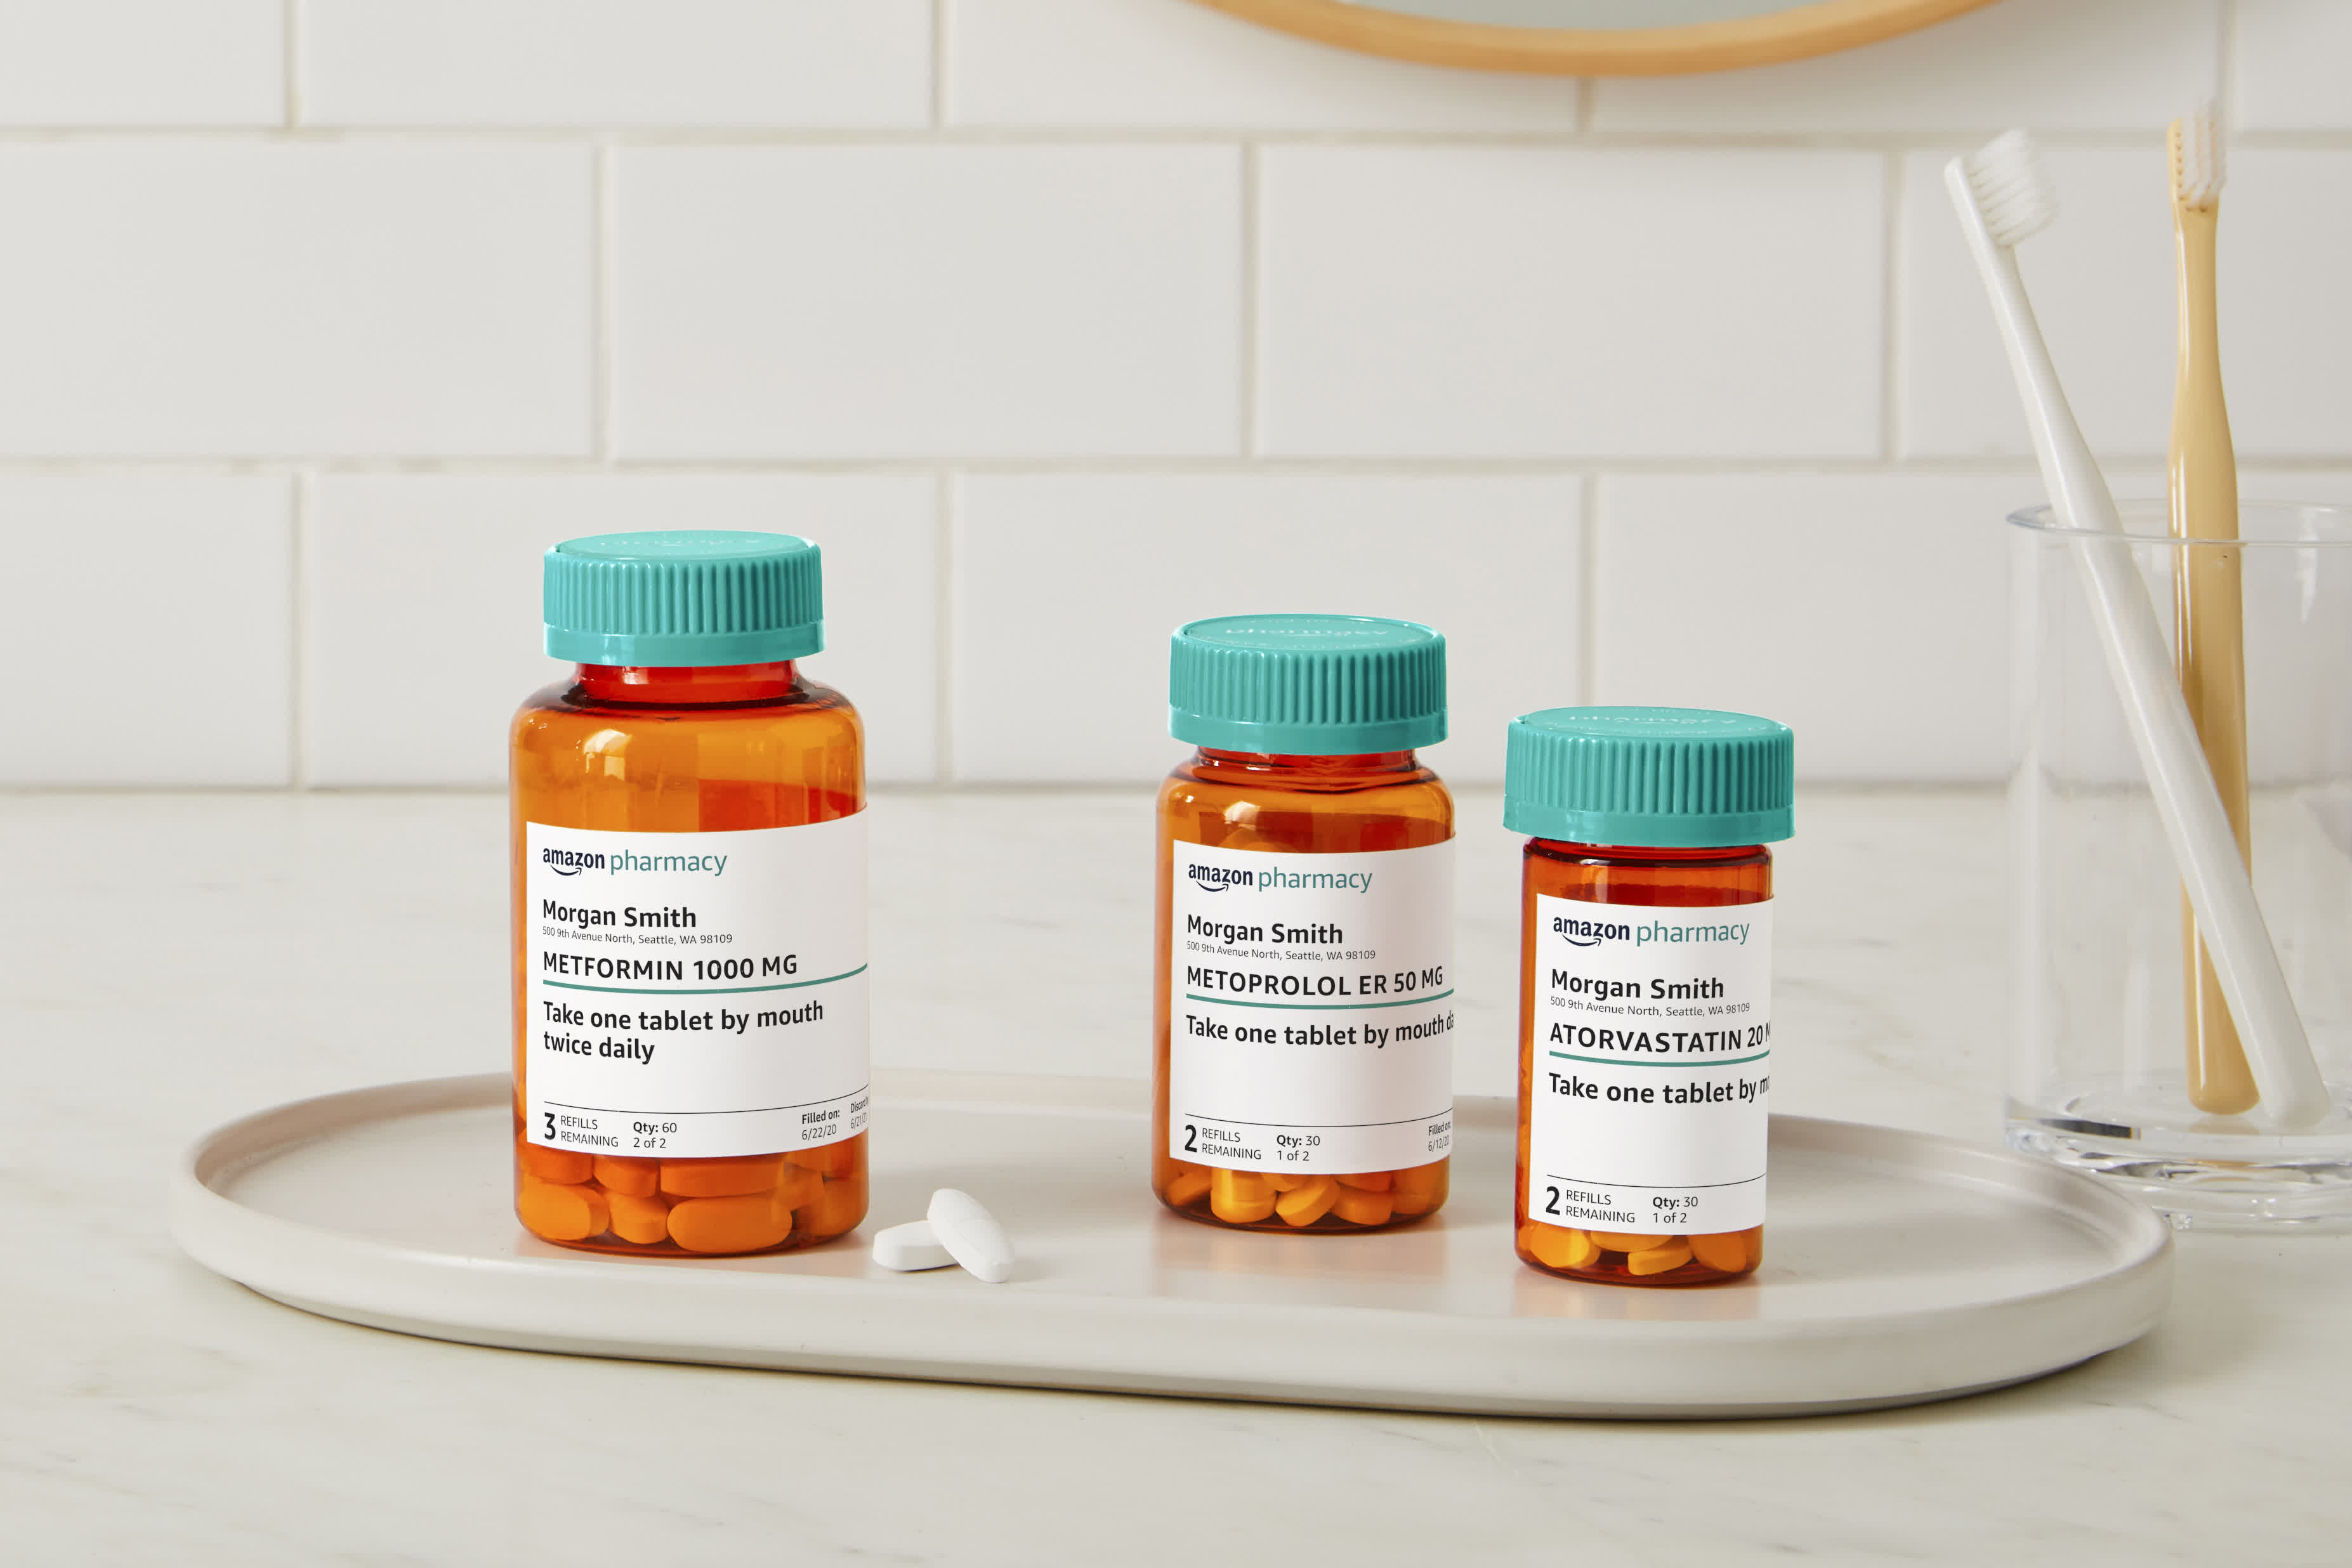 Amazon enters the prescription medication delivery business